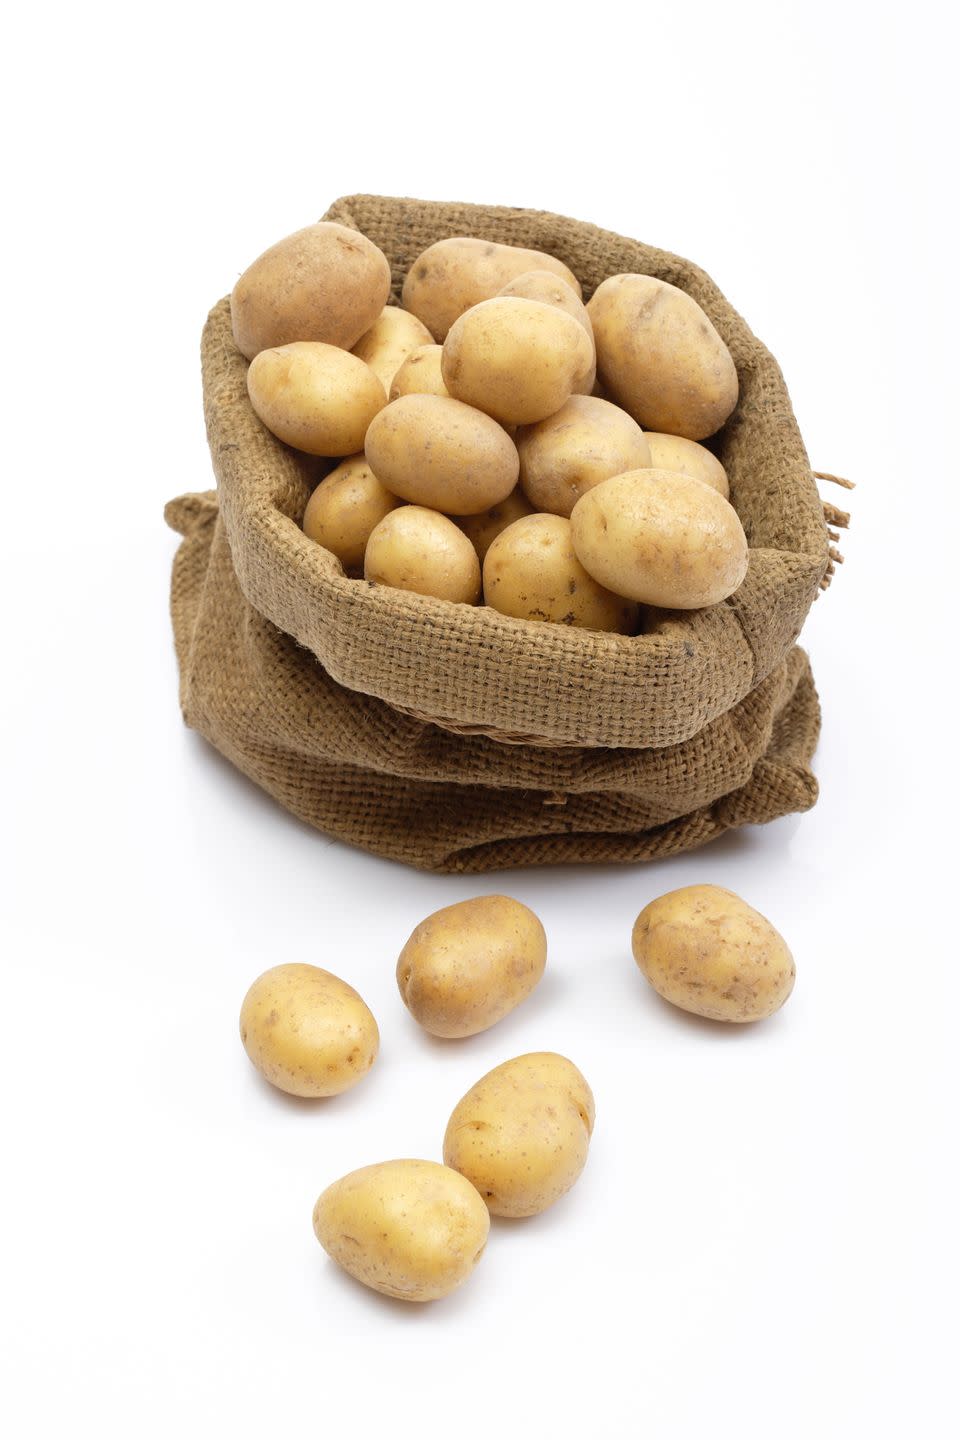 White Potatoes